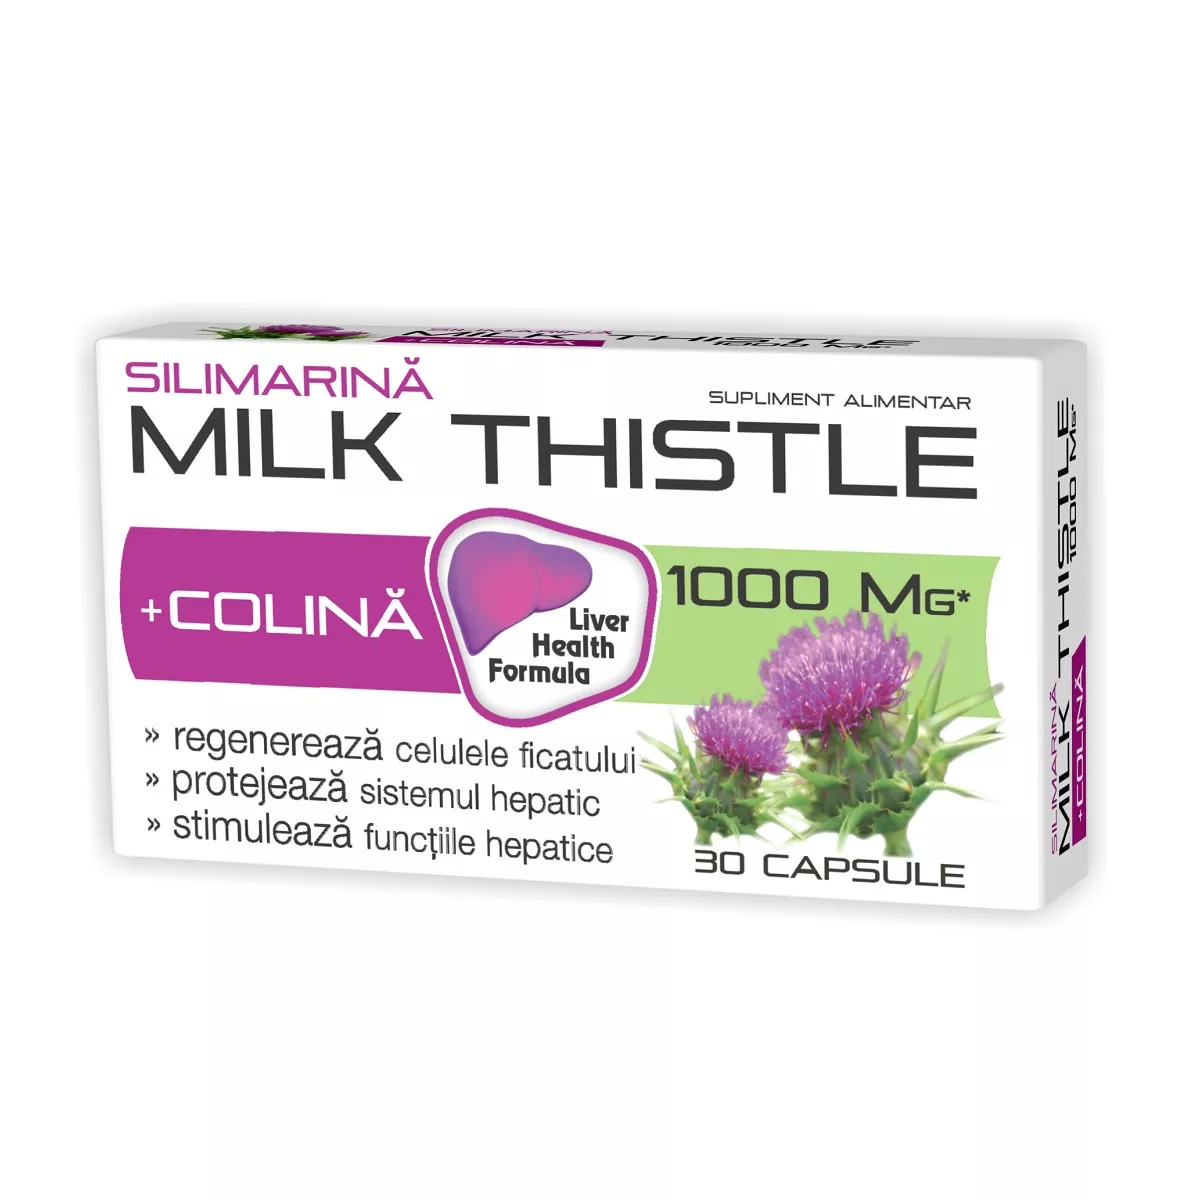 Silimarina + Colina Milk Thistle 1000mg, 30 capsule, Zdrovit, [],nordpharm.ro